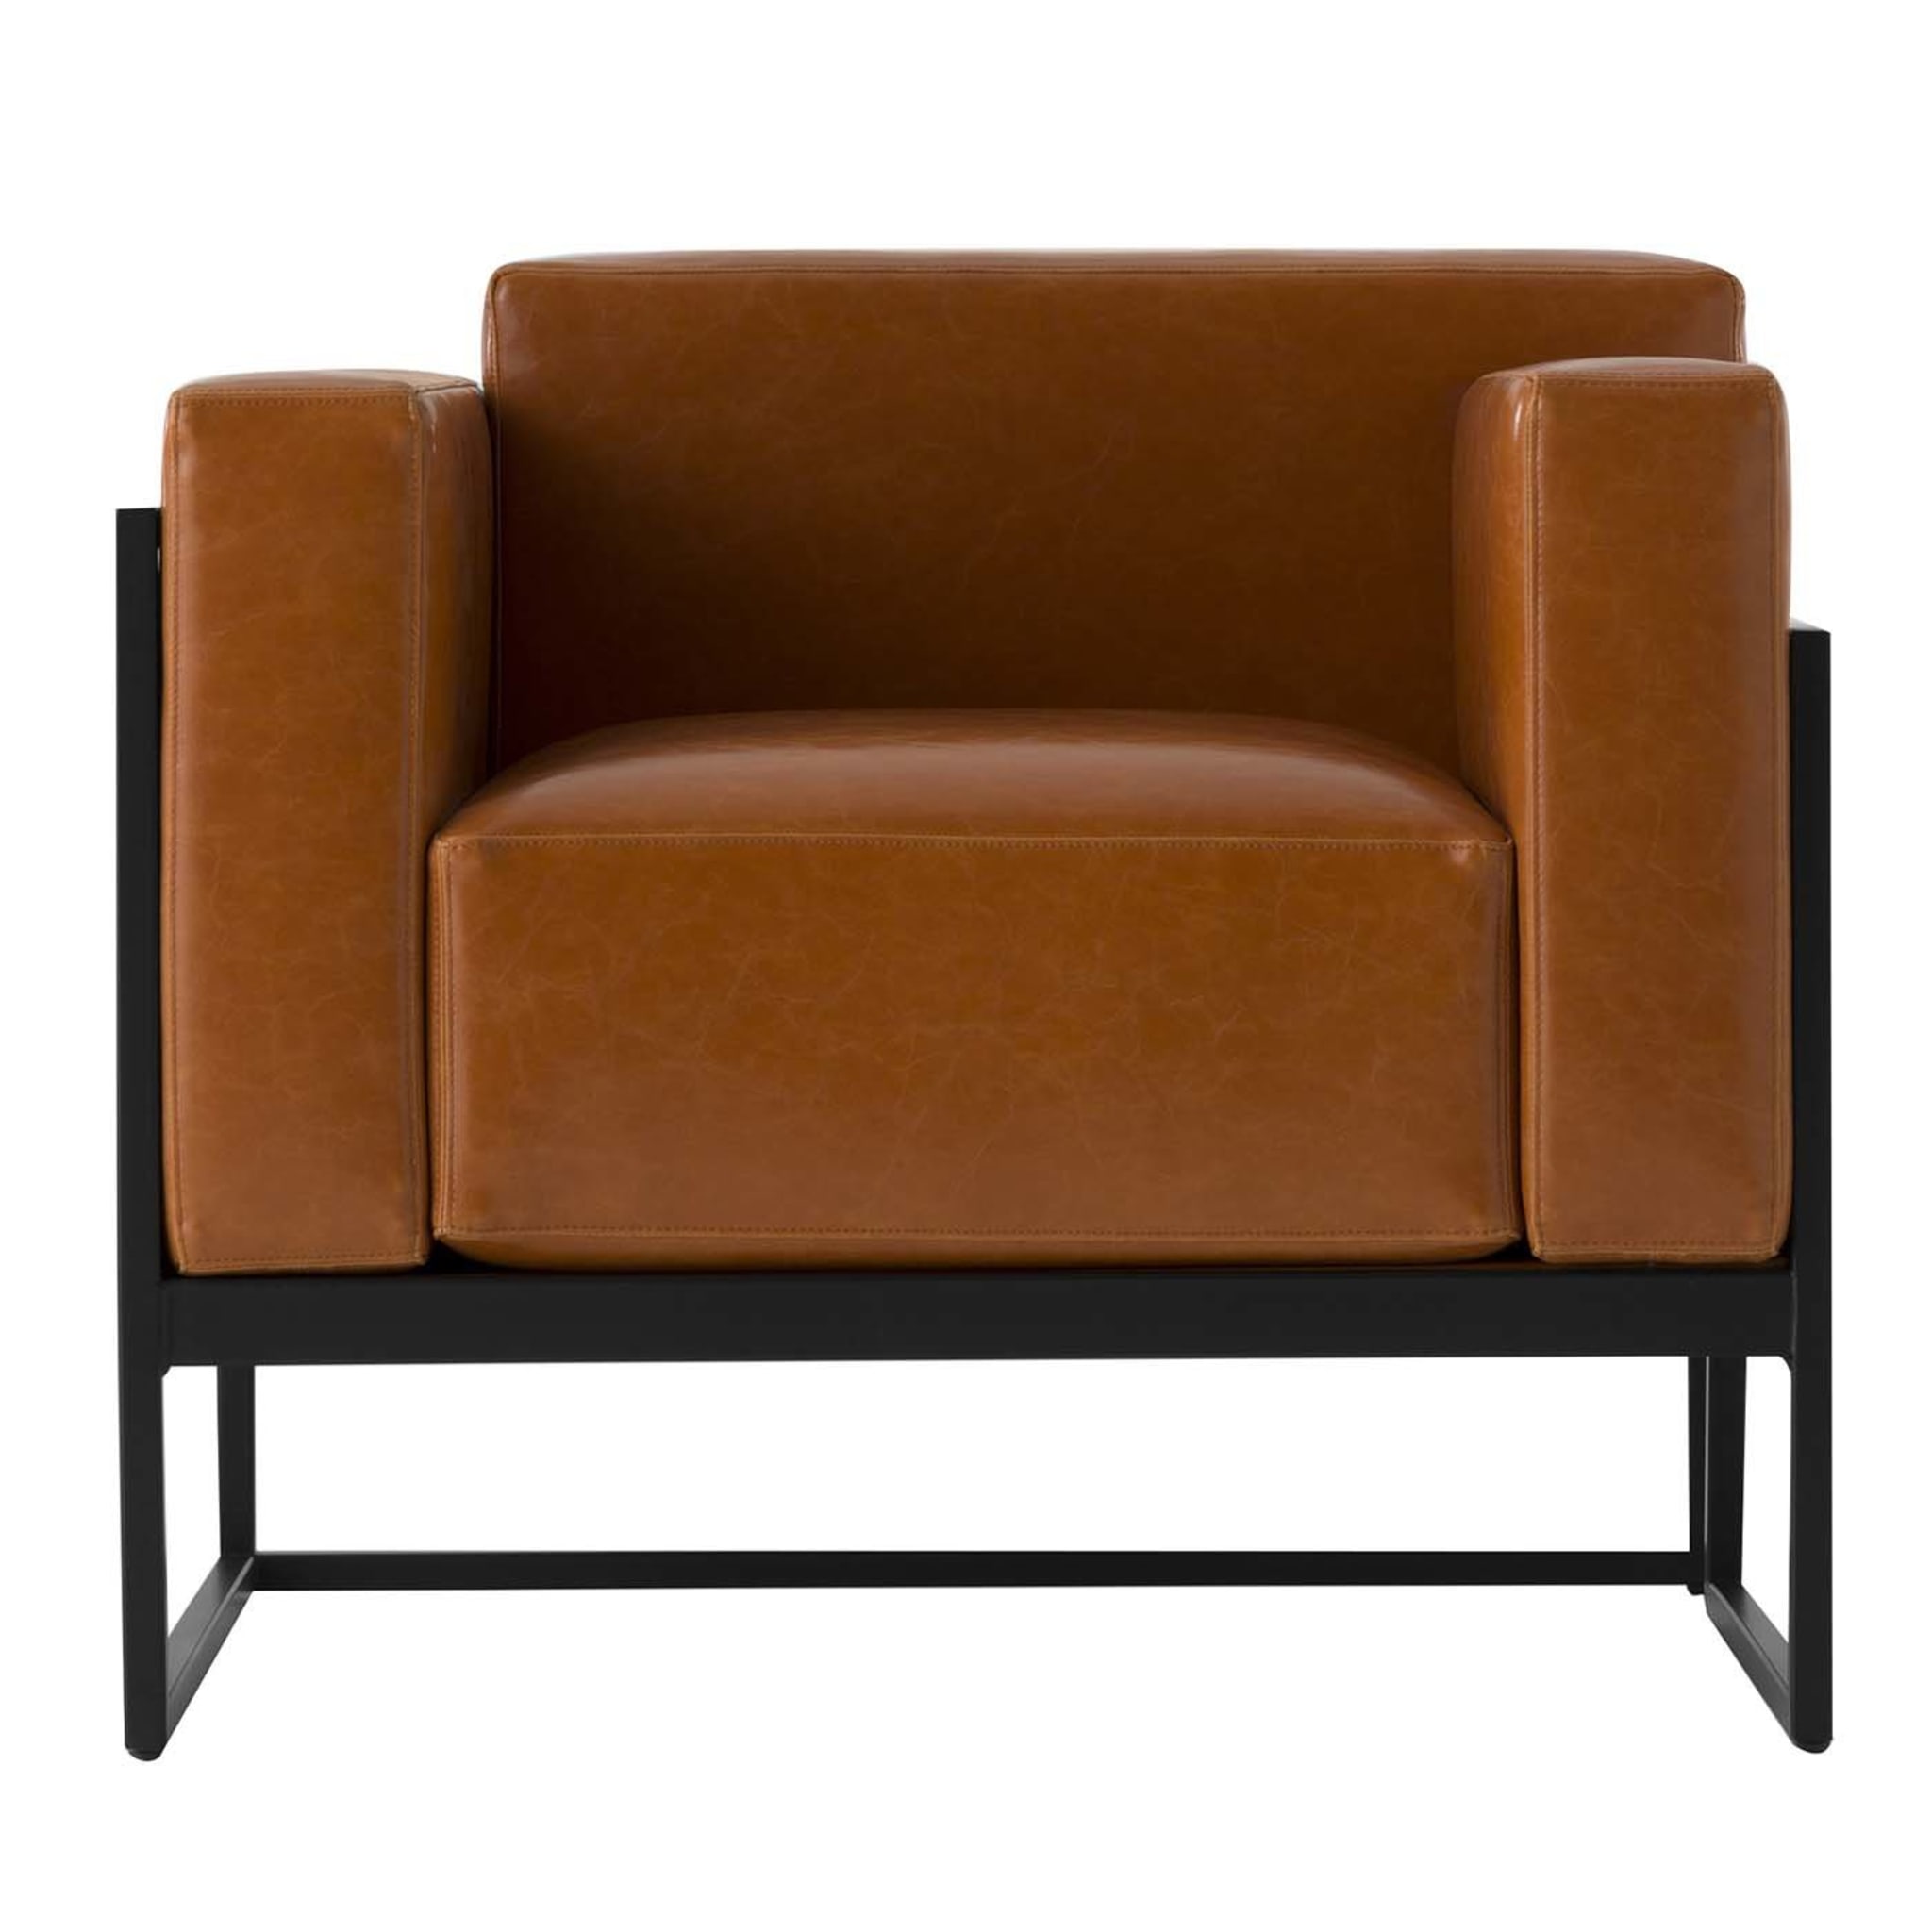 Kirk Cognac Leather Armchair - Main view